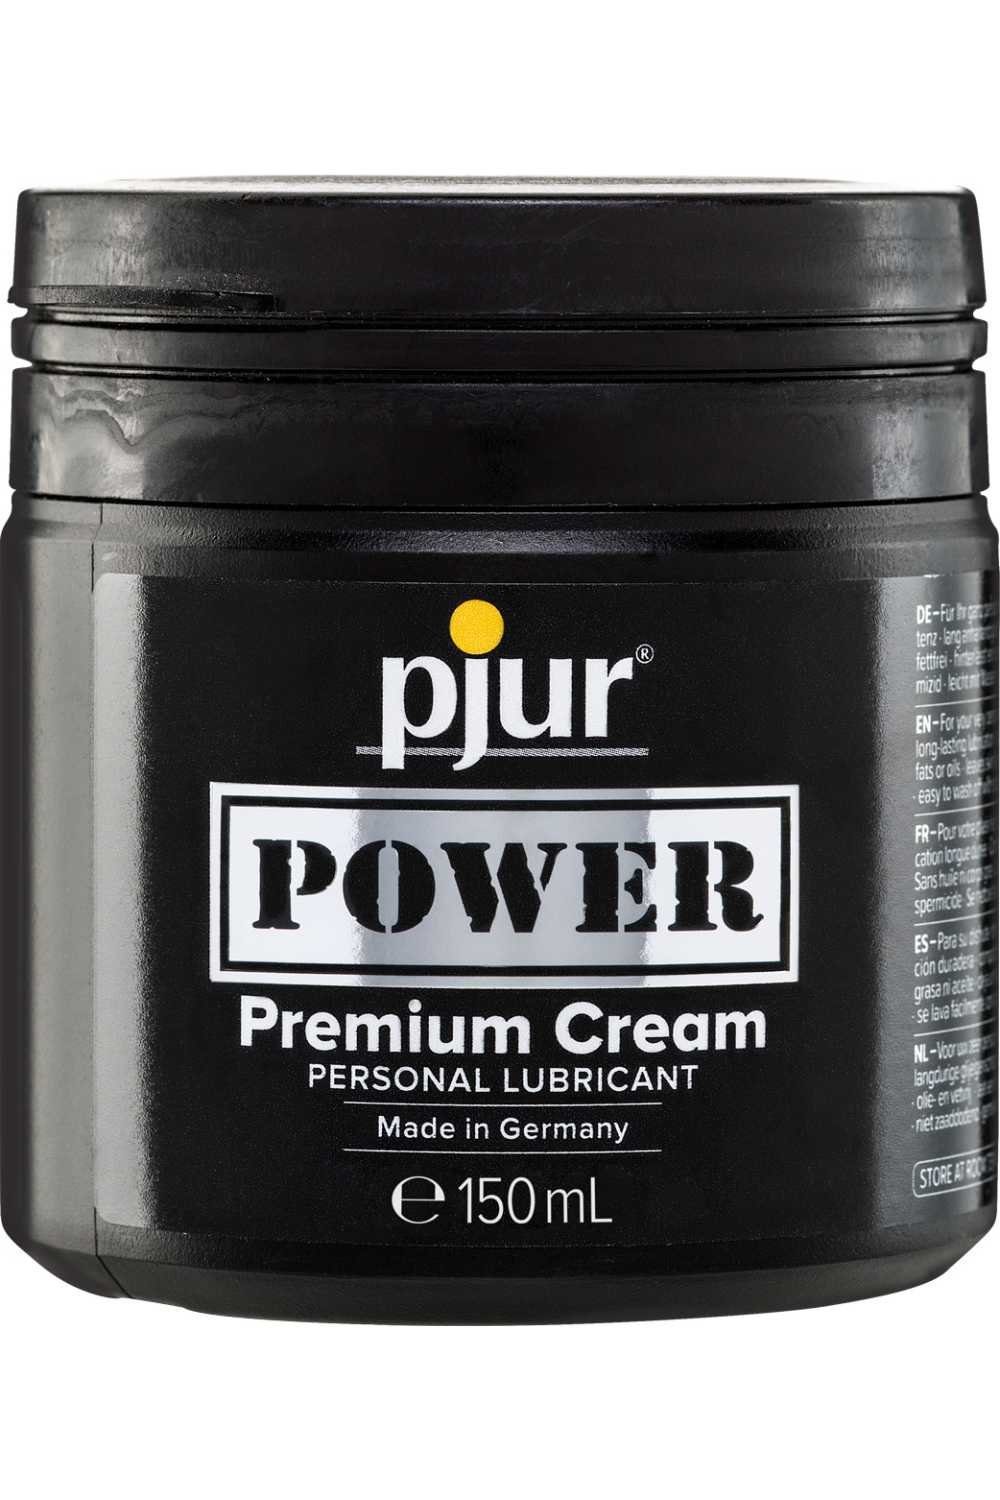 pjur Analgleitgel pjur POWER Premium Cream